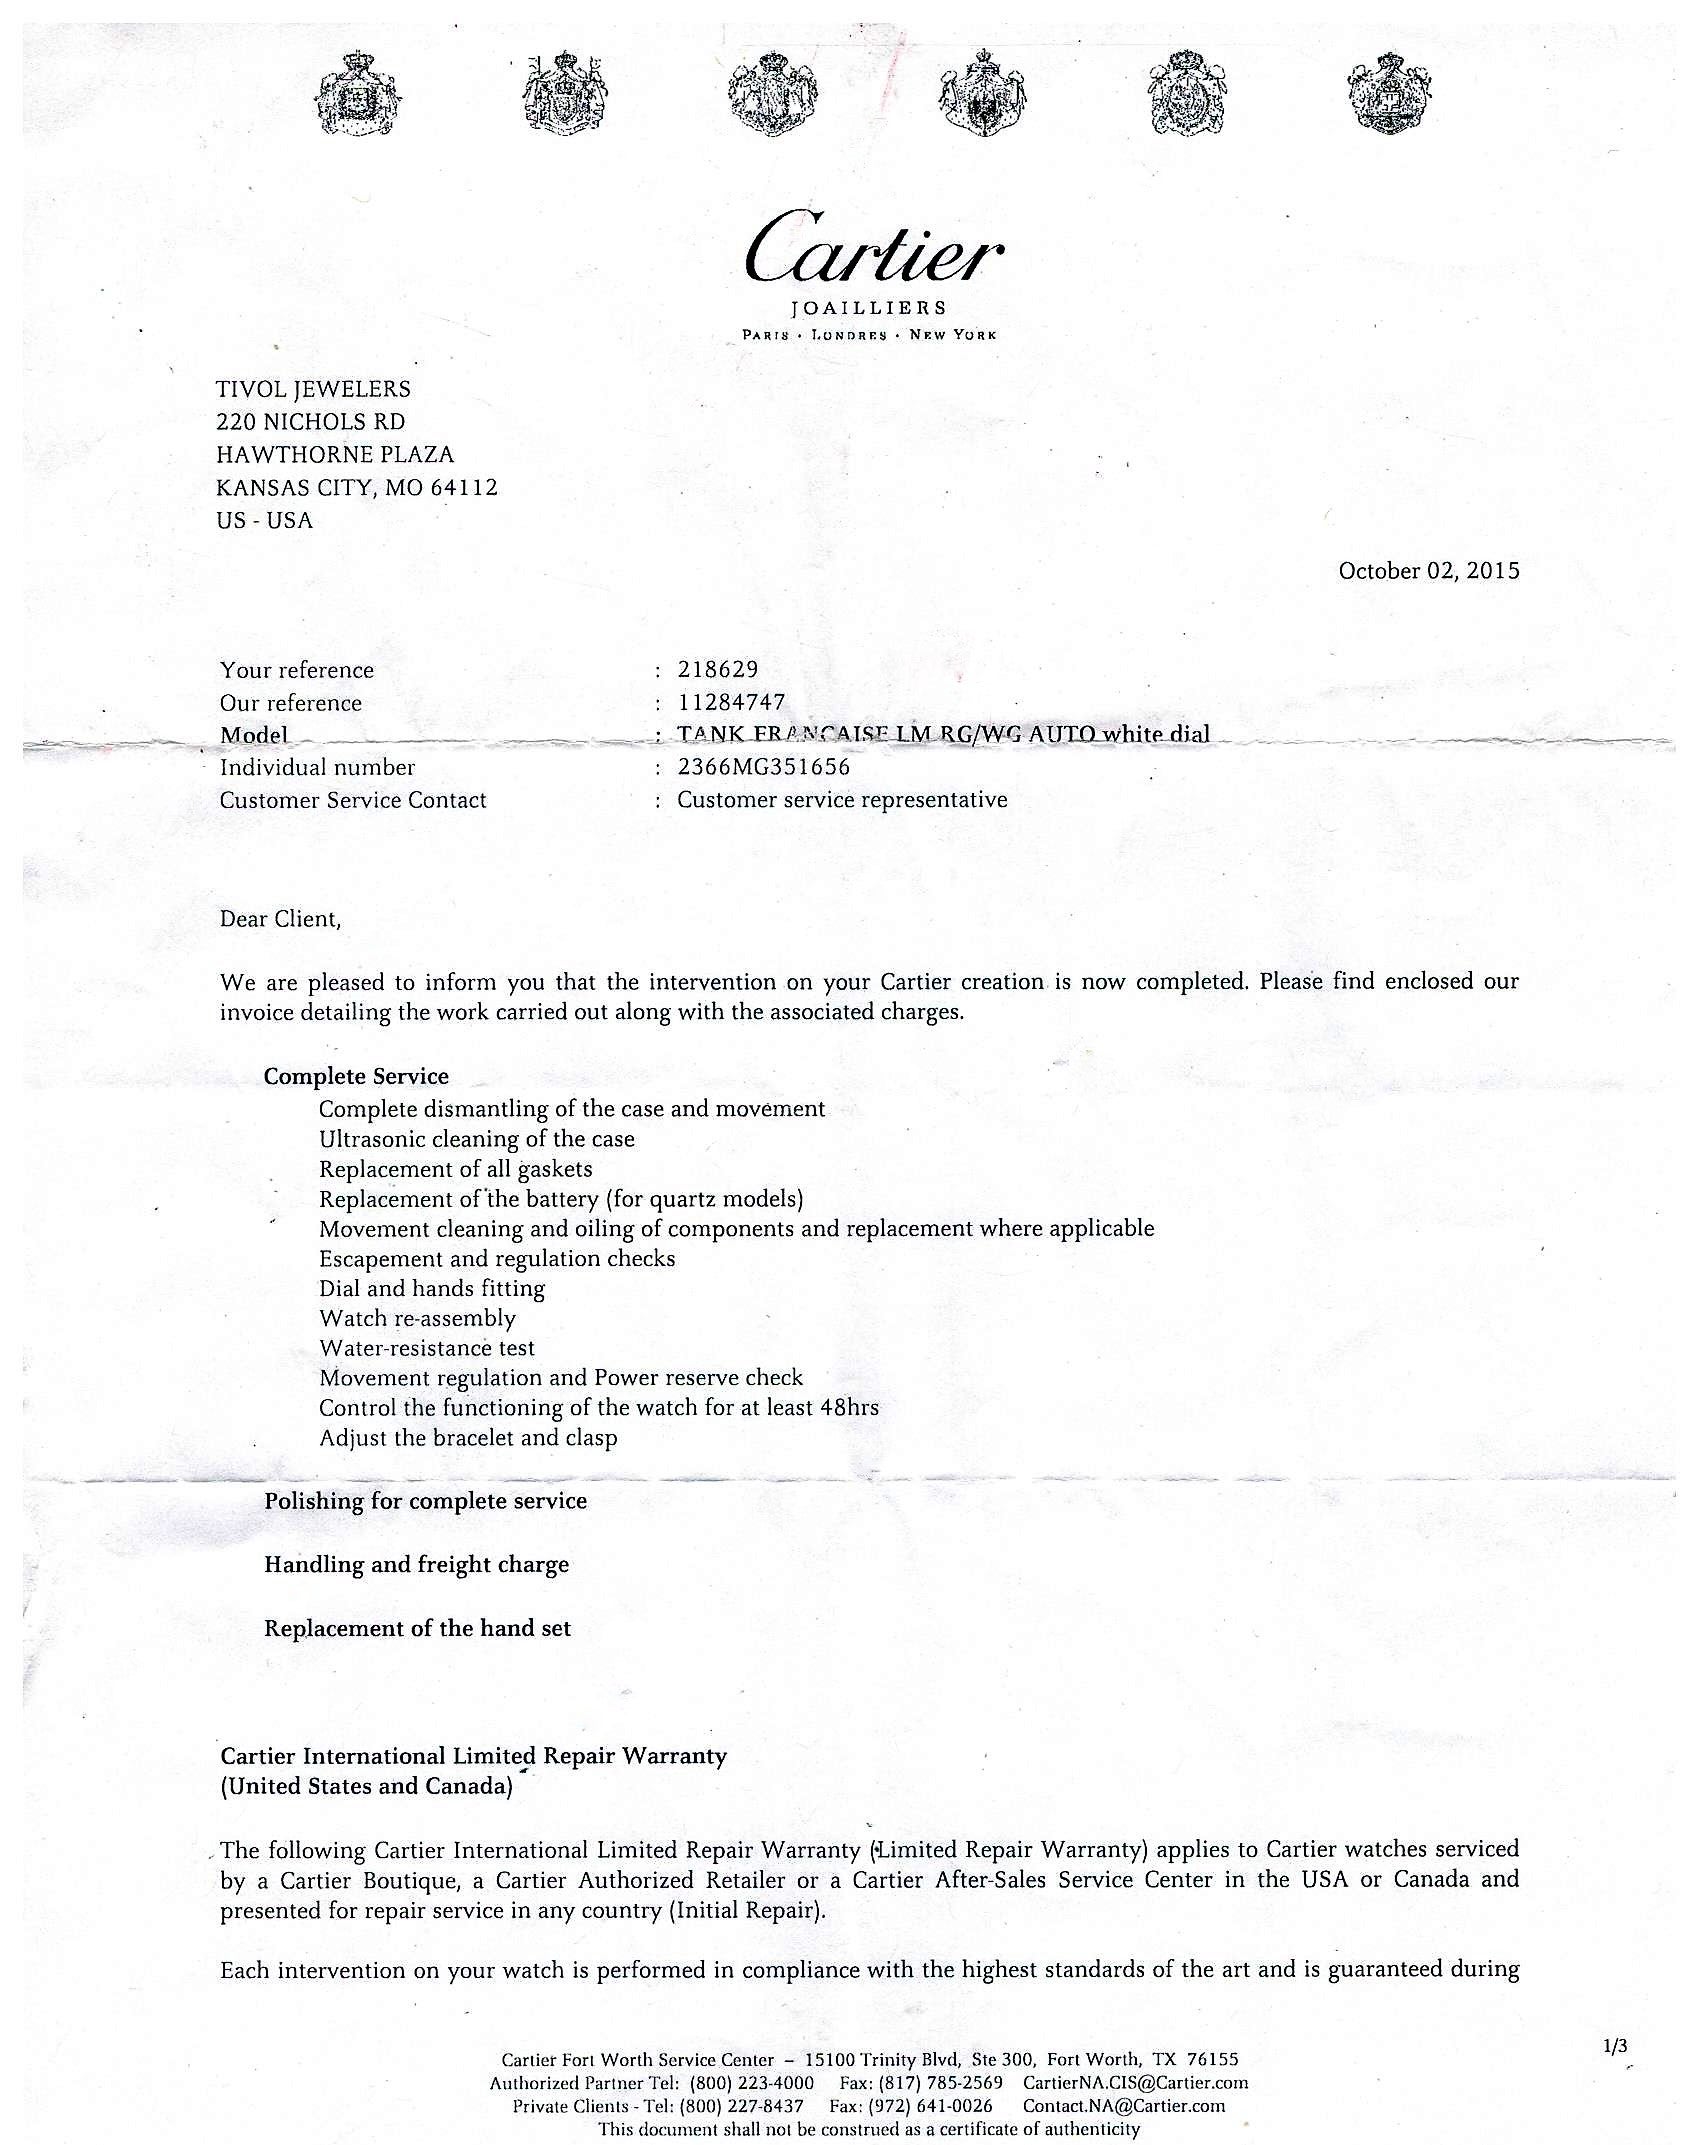 cartier replacement certificate